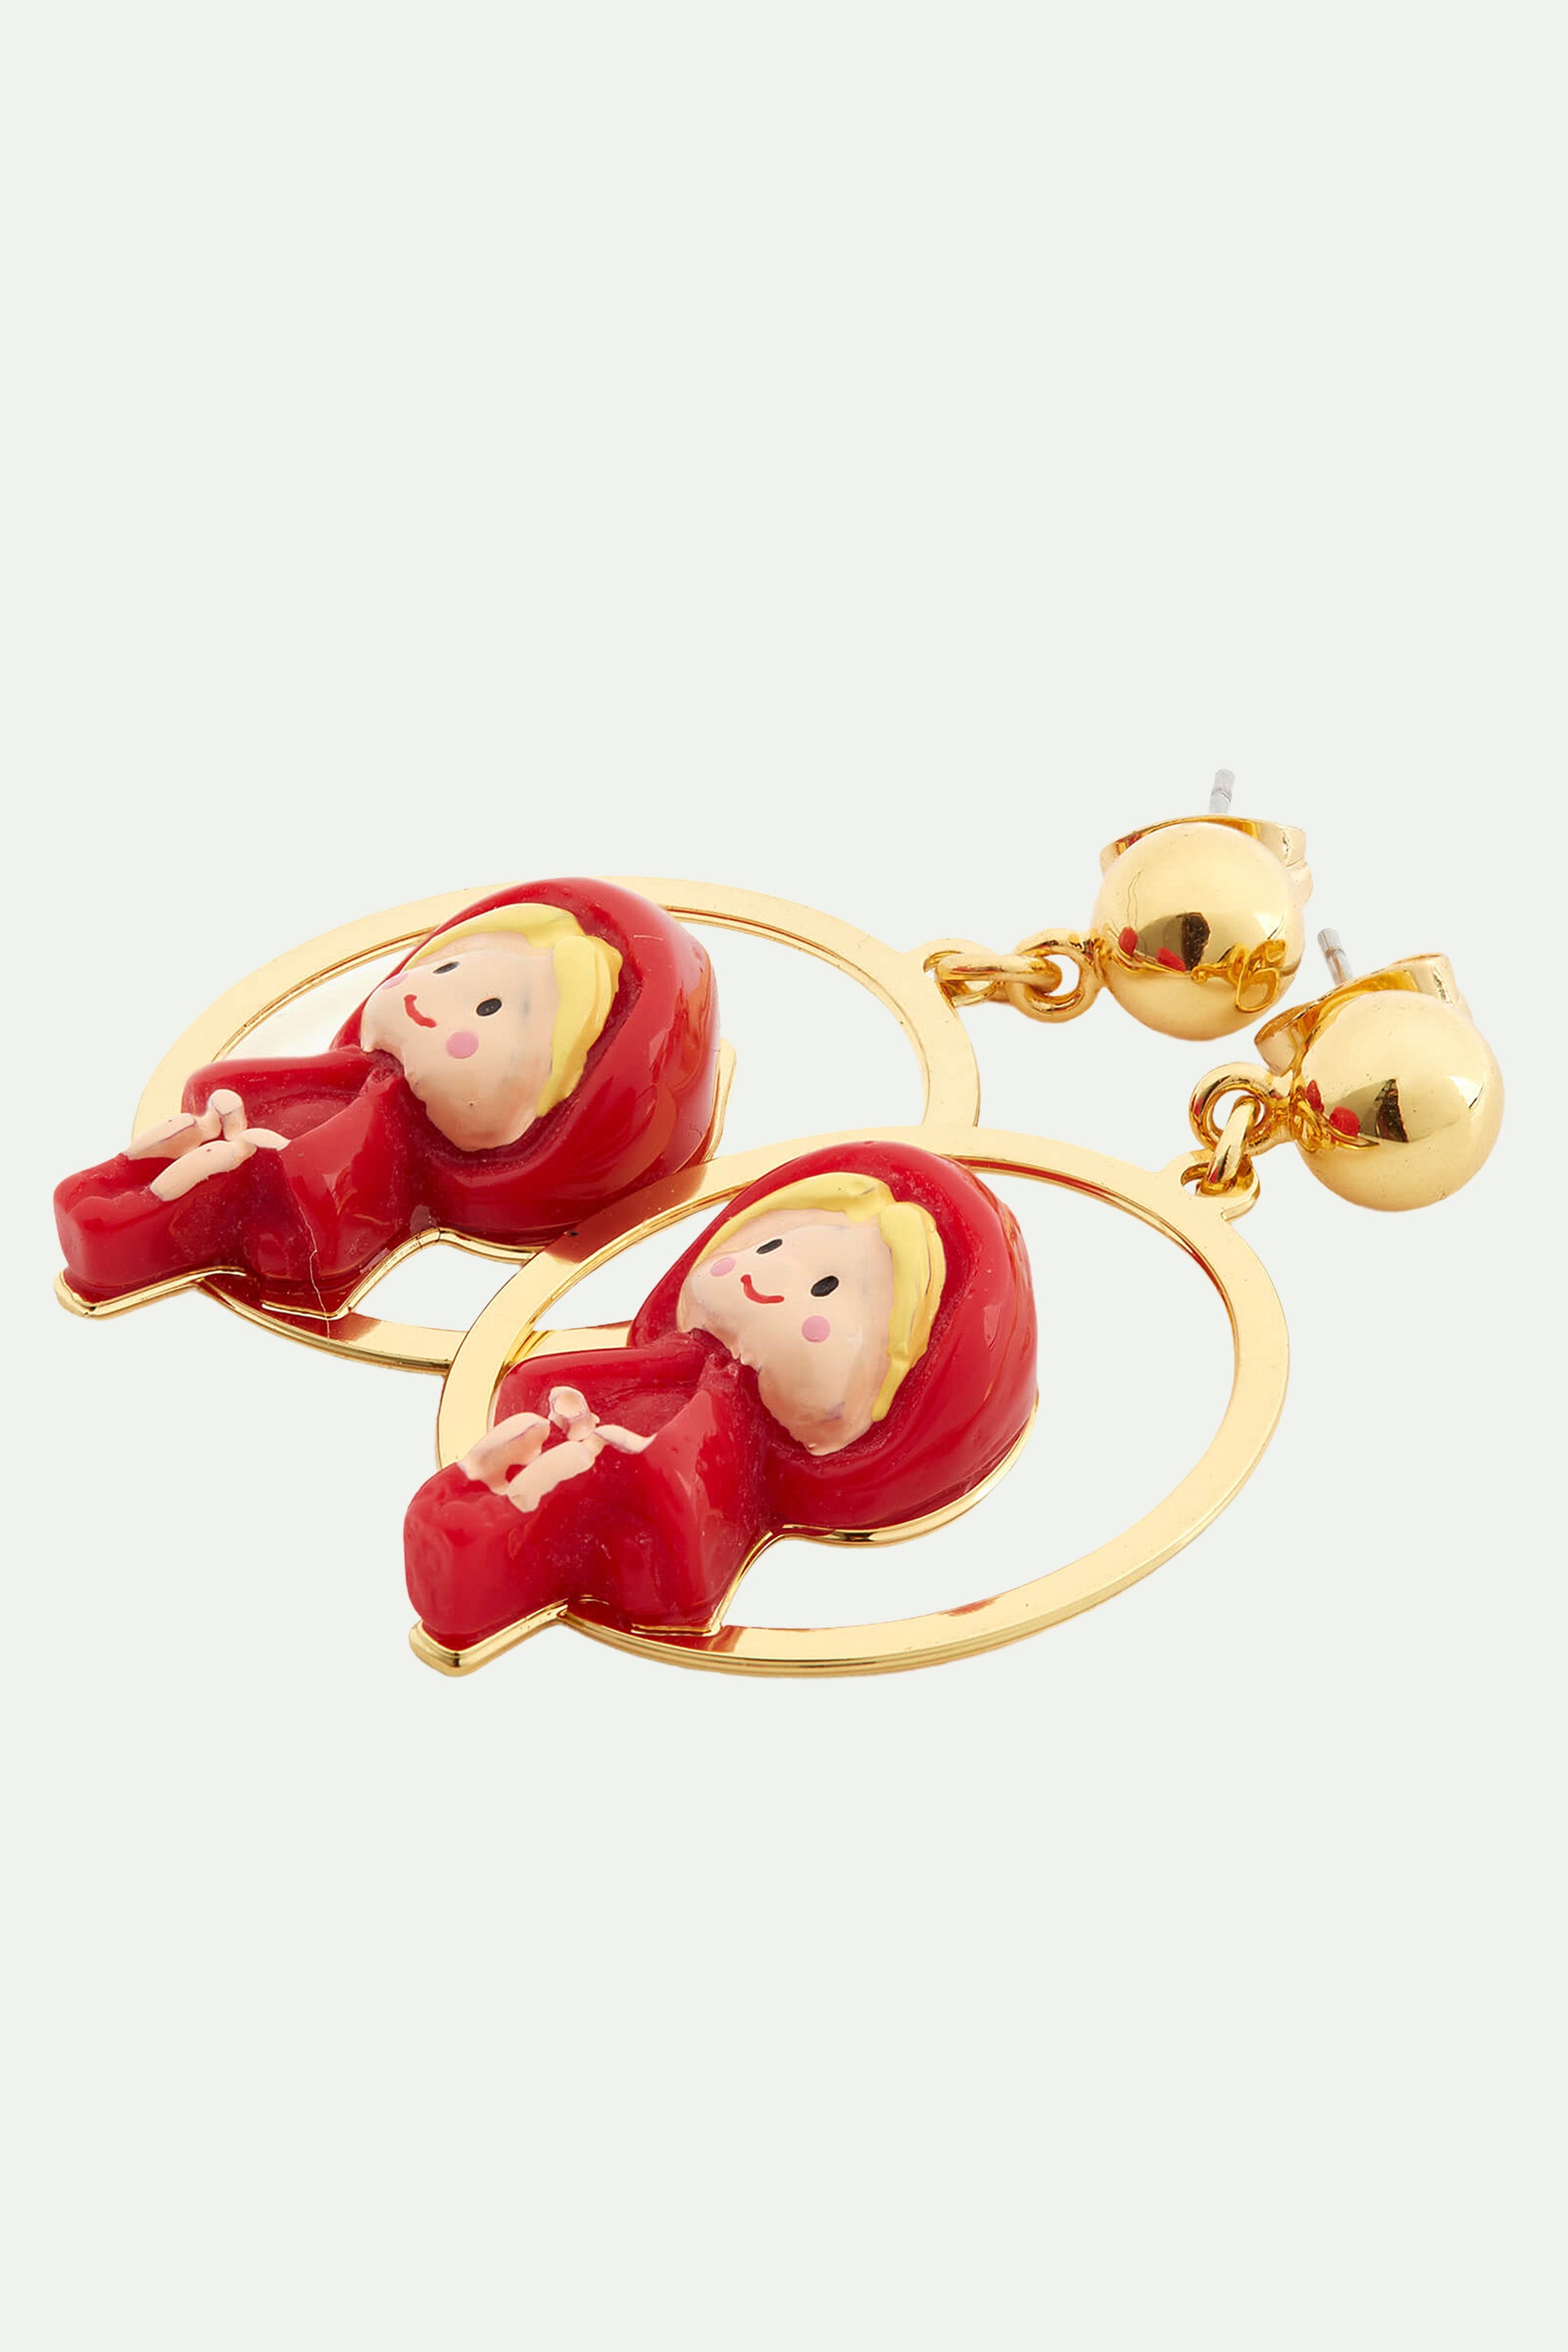 Little Red Riding Hood post earrings